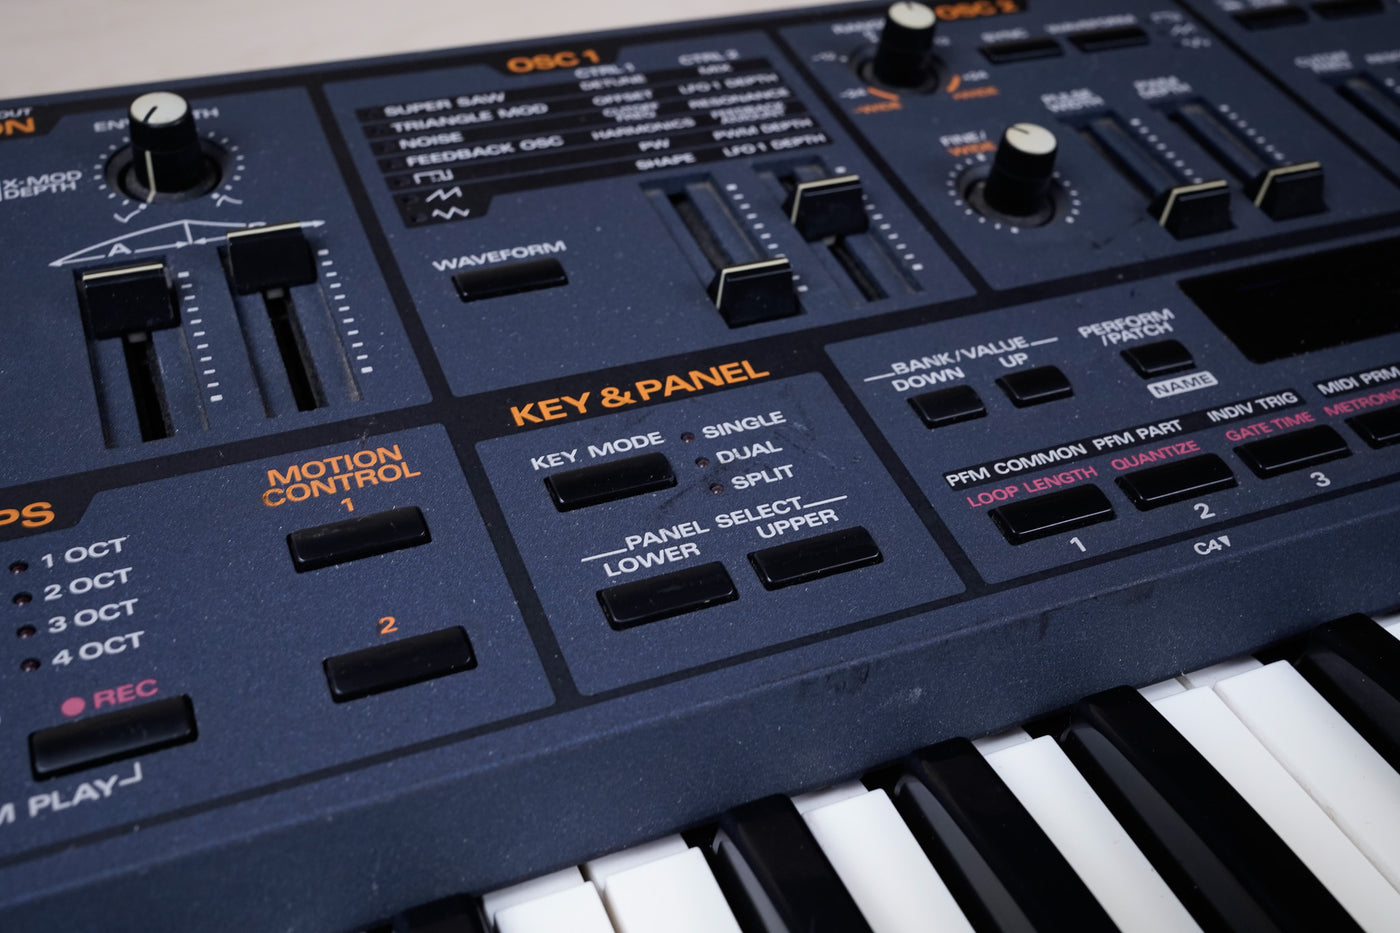 Roland JP-8000 49-Key Synthesizer 1997 - Cobalt